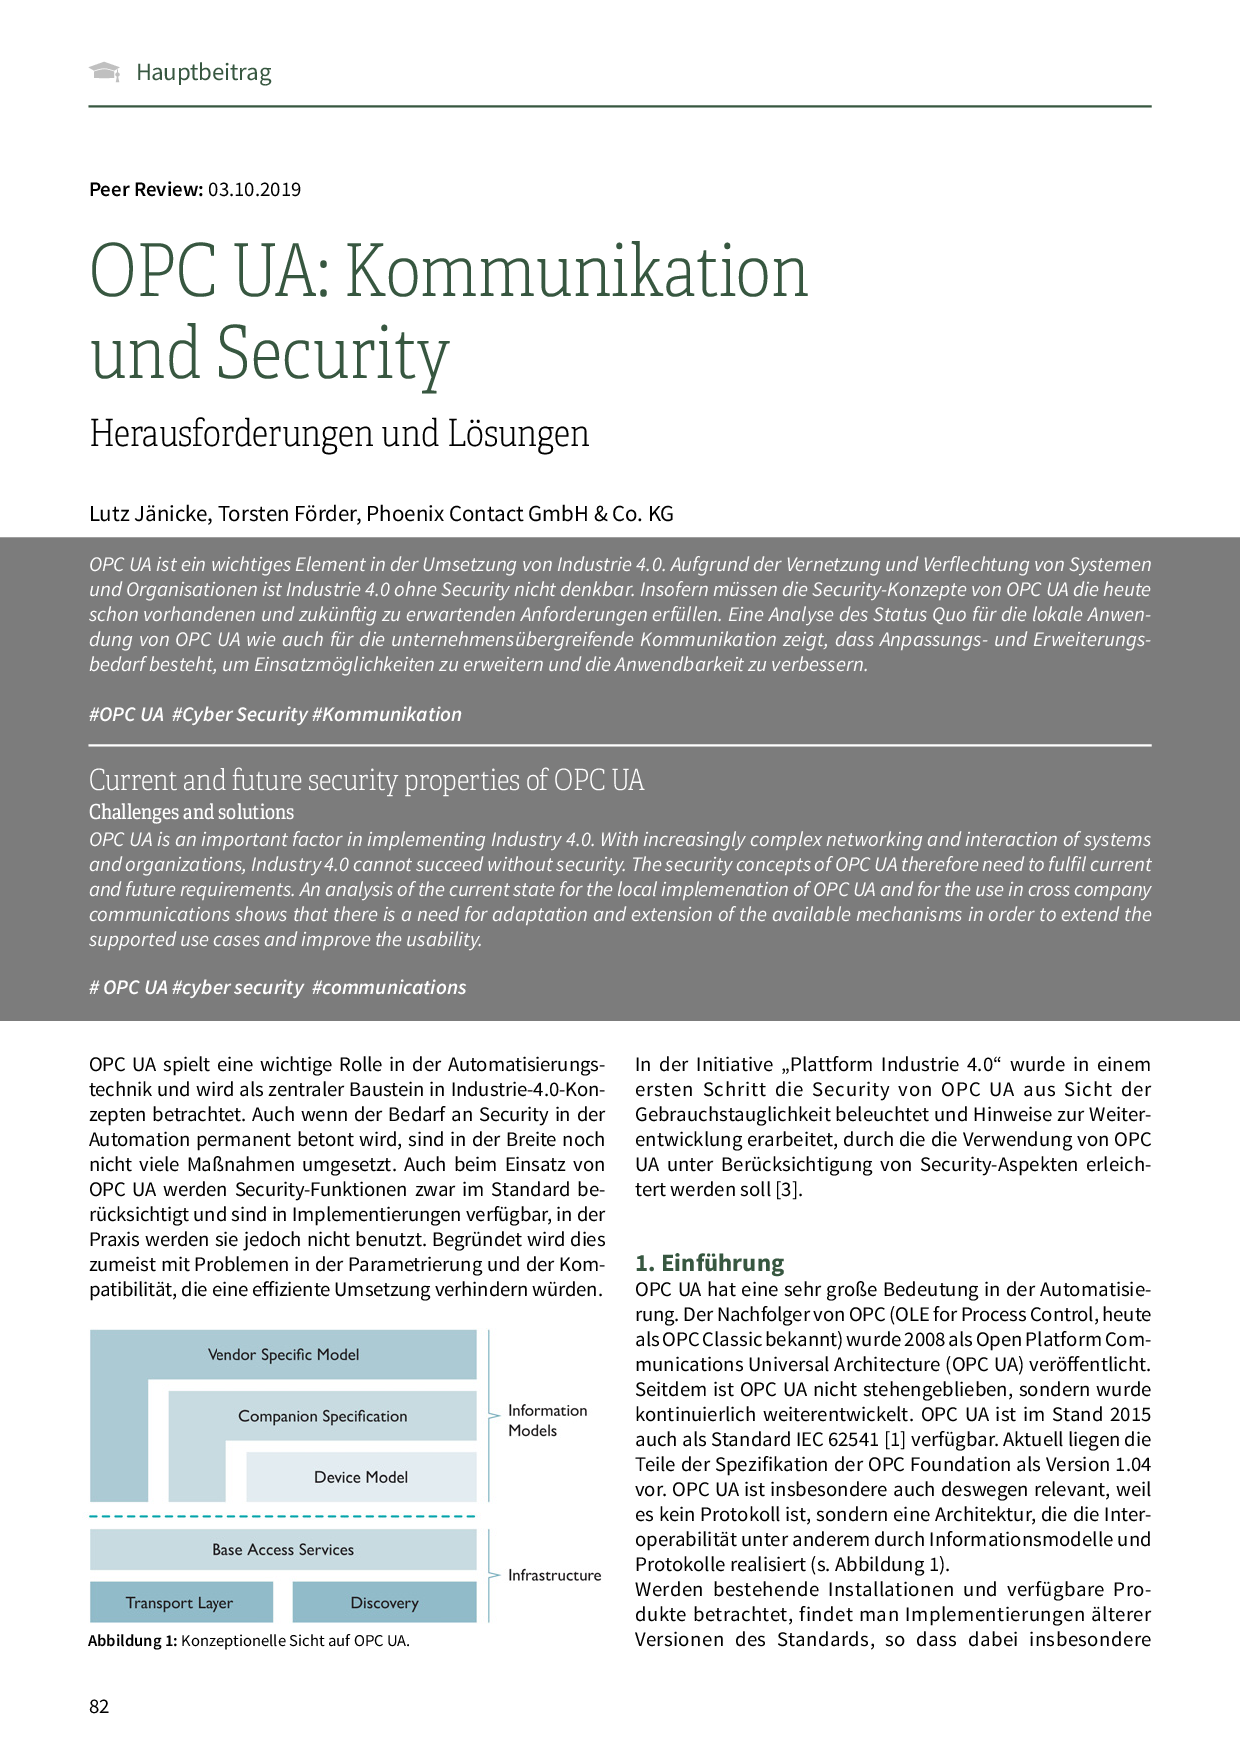 OPC UA: Kommunikation und Security